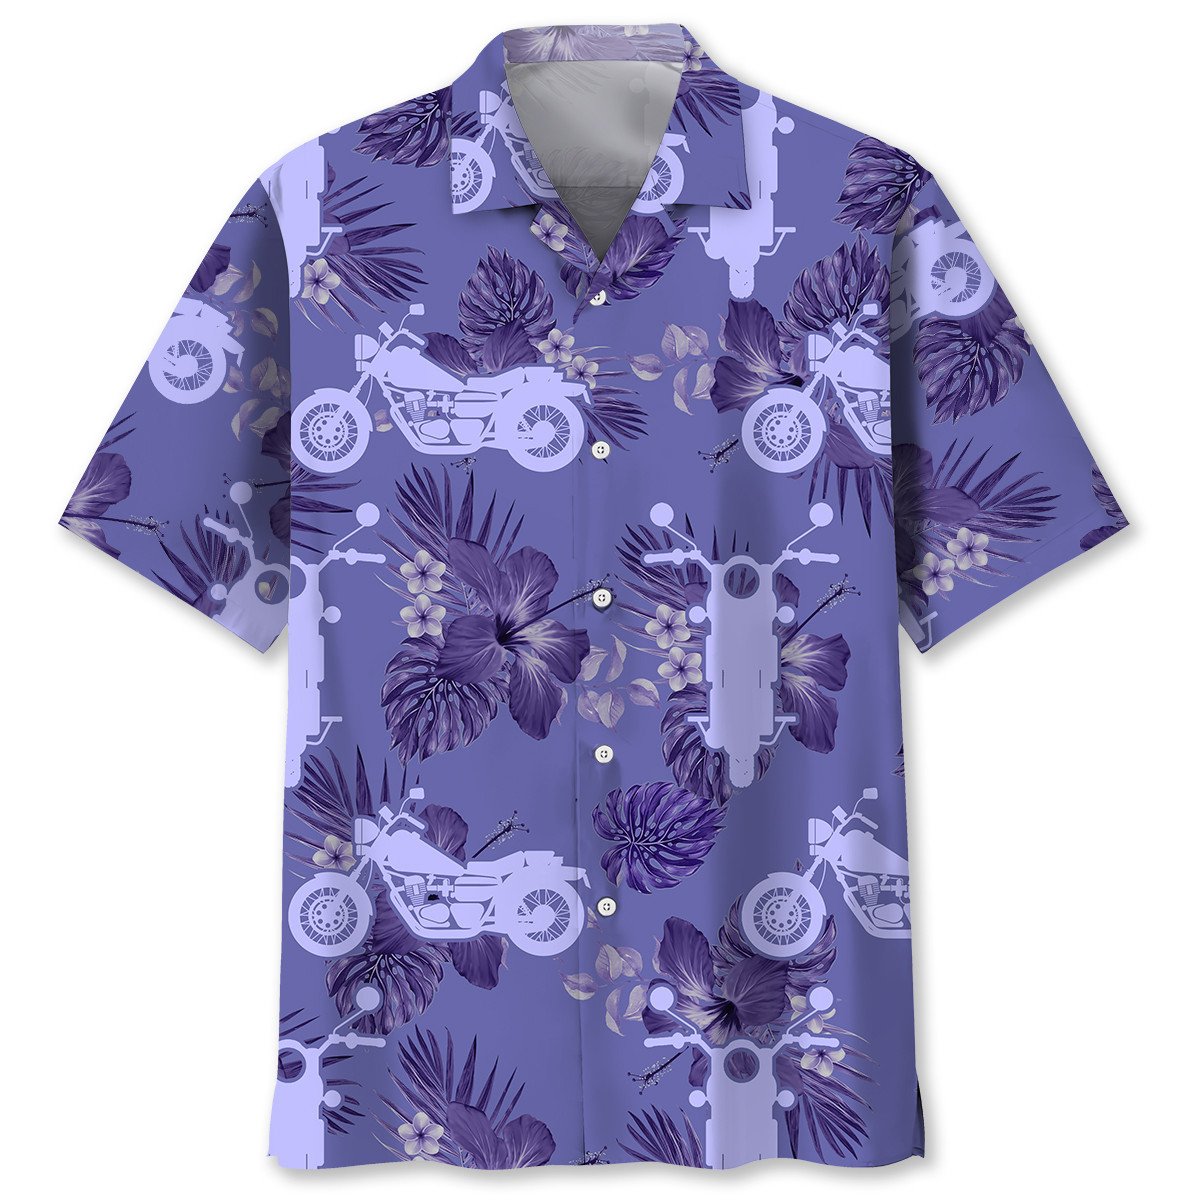 NEW Motorcycle pattern purple Hawaiian Shirt